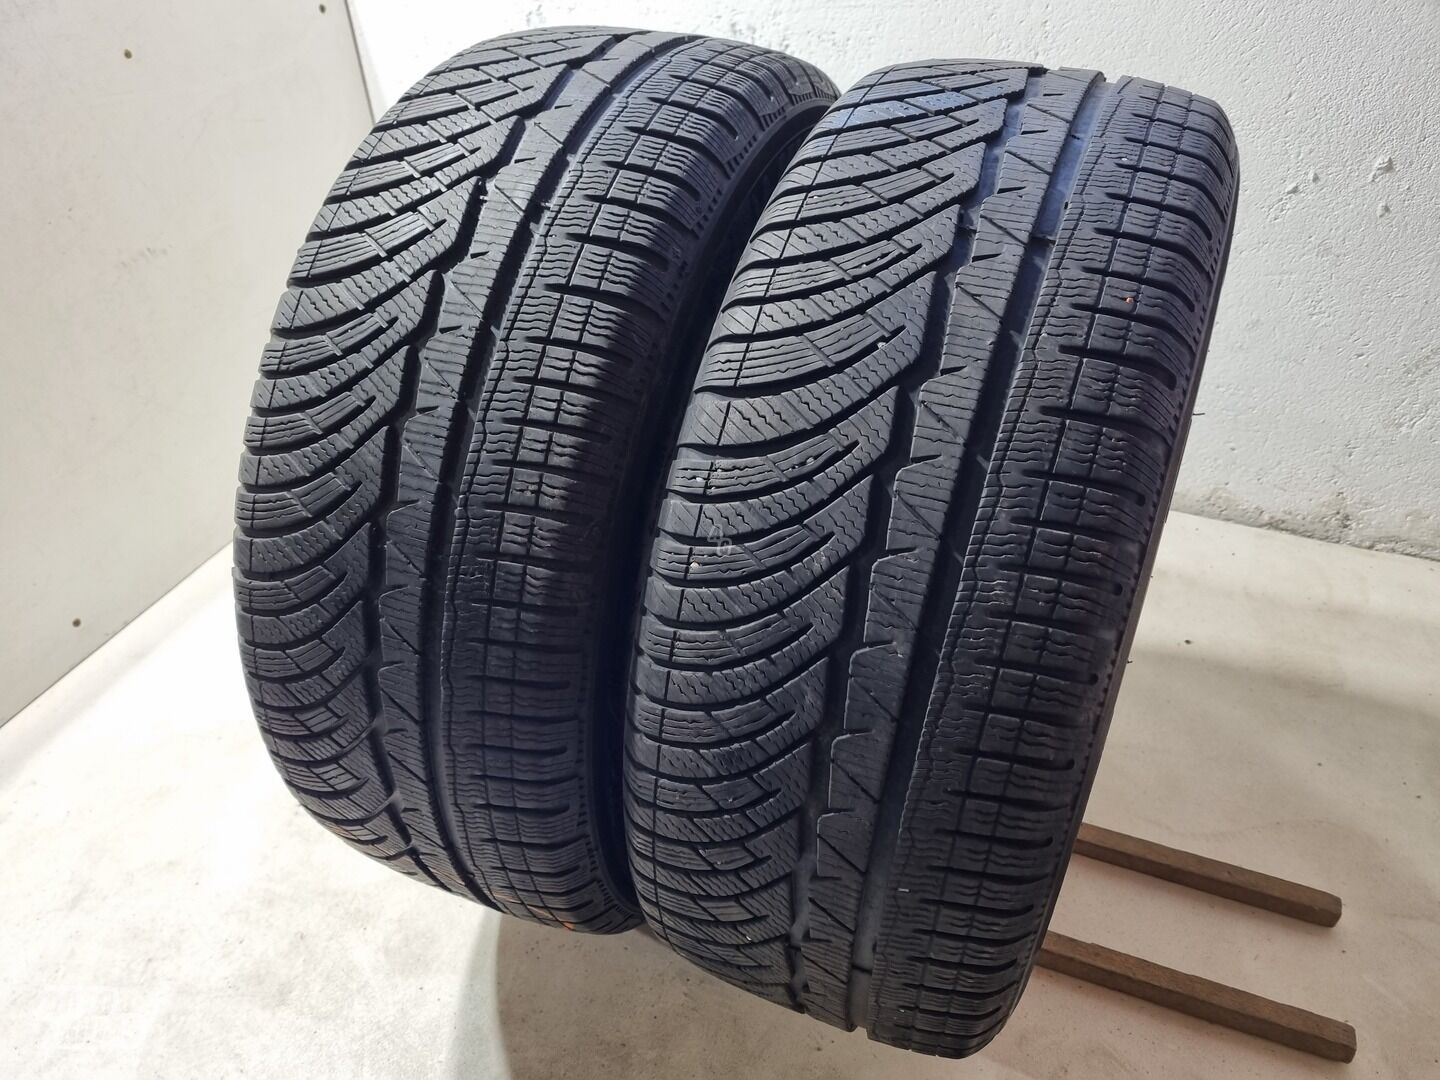 Michelin 2020m R18 universal tyres passanger car